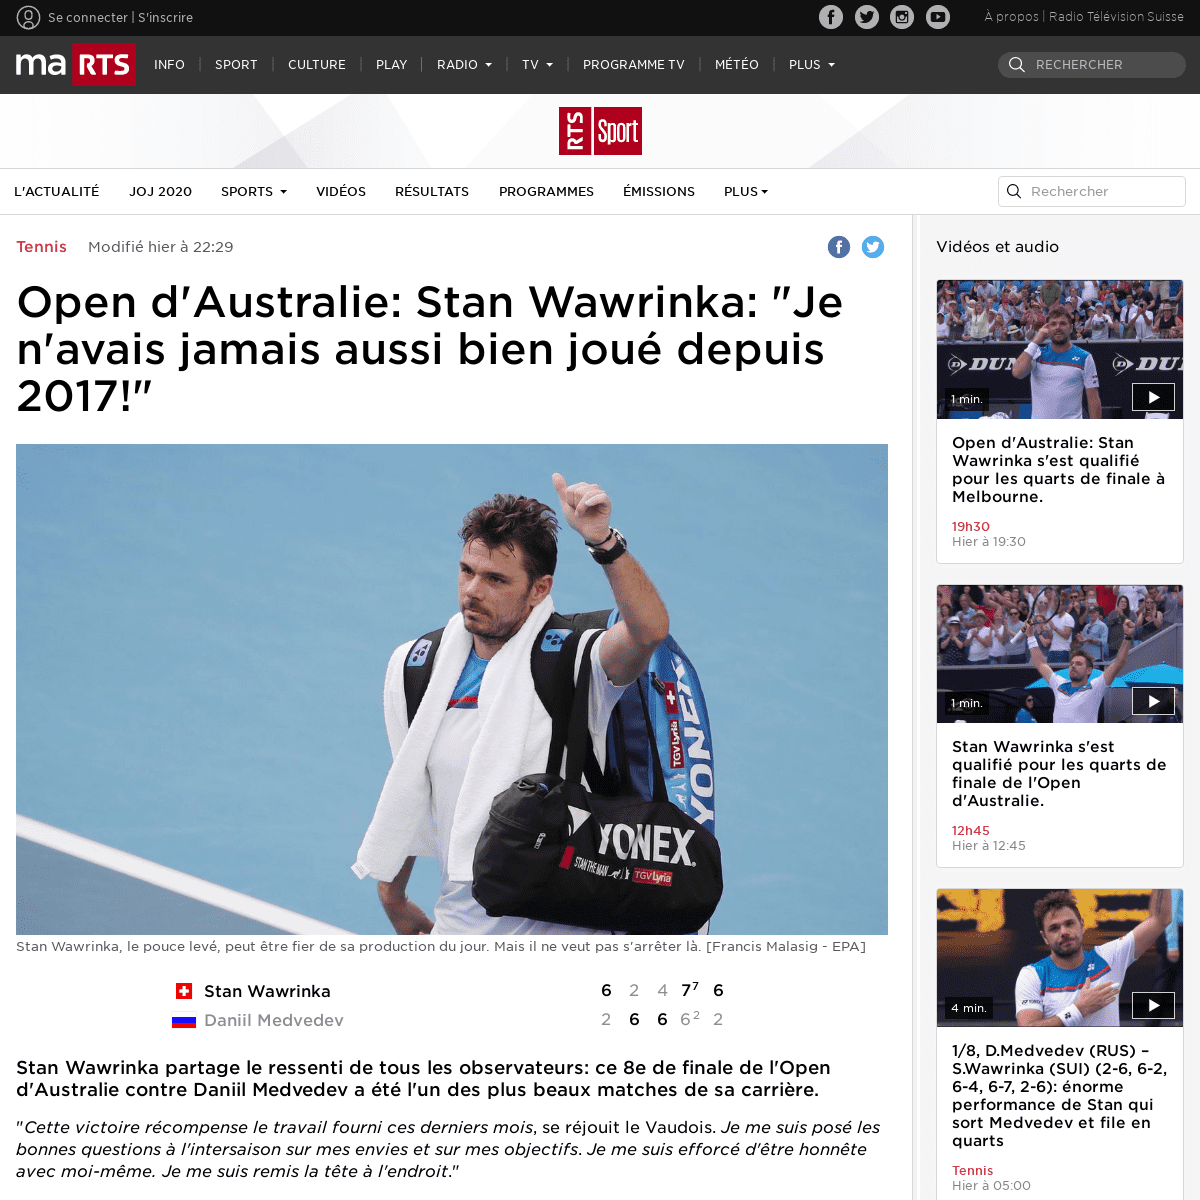 A complete backup of www.rts.ch/sport/tennis/11046487-open-daustralie-stan-wawrinka-je-navais-jamais-aussi-bien-joue-depuis-2017